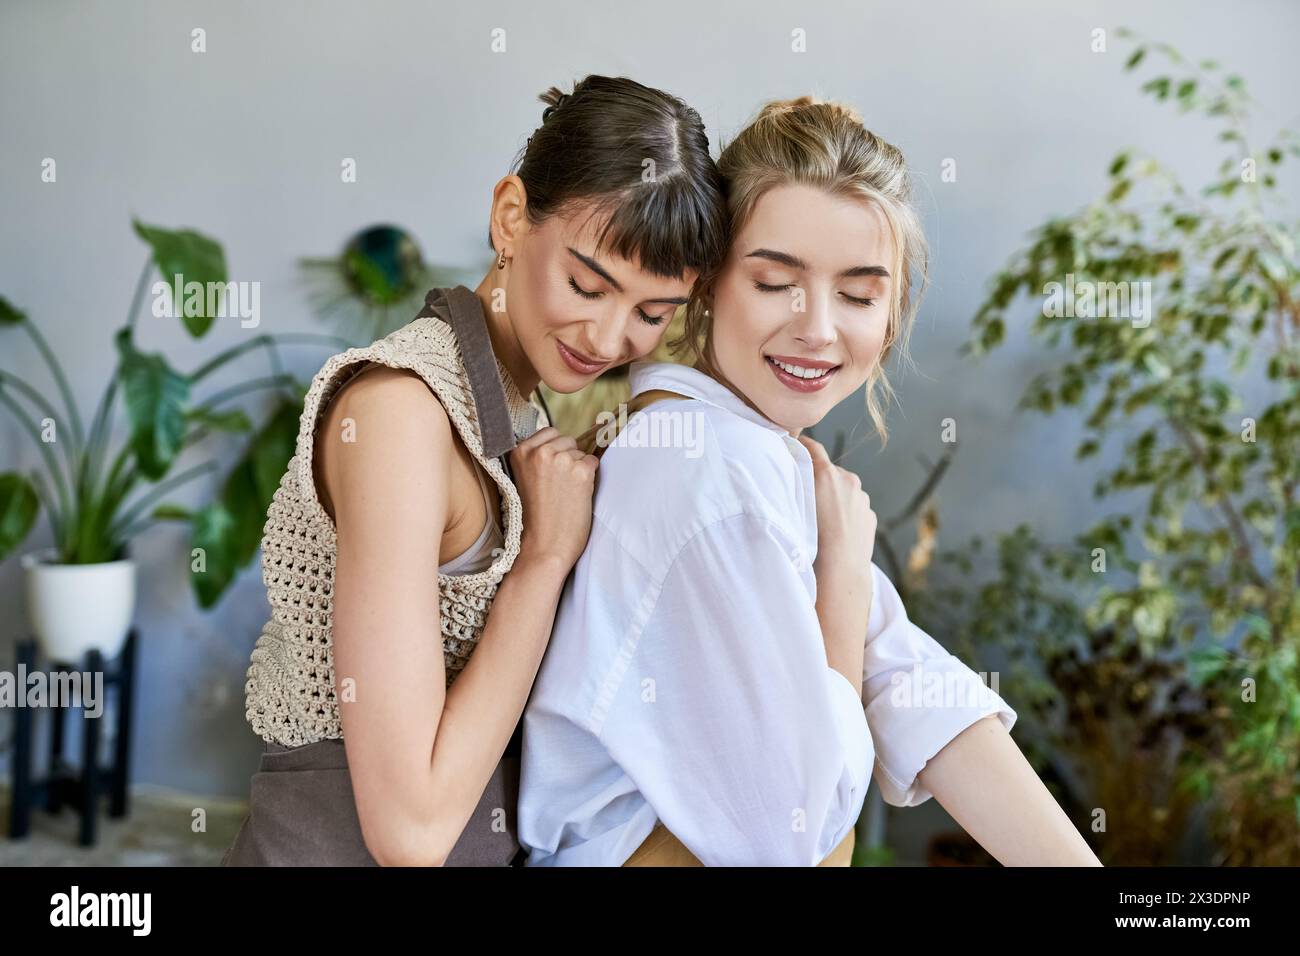 Two women sharing a heartfelt hug in an art-filled space. Stock Photo